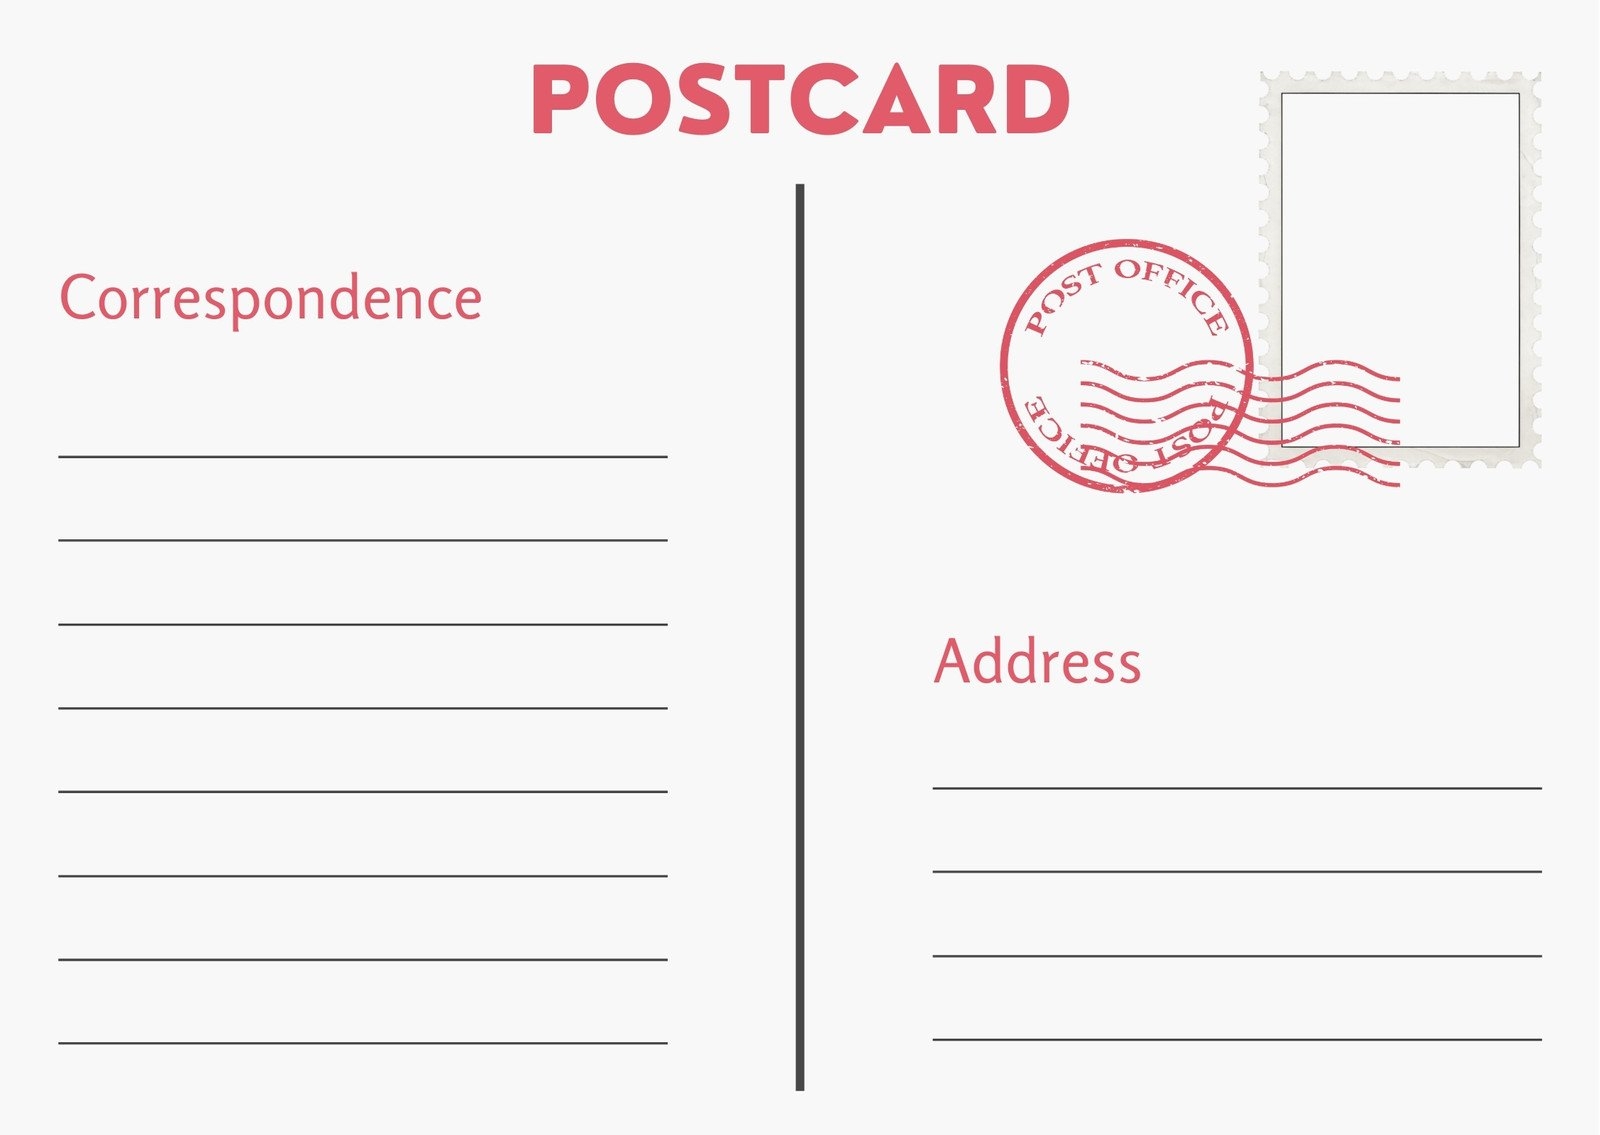 Design Print Custom Postcards Online Canva US